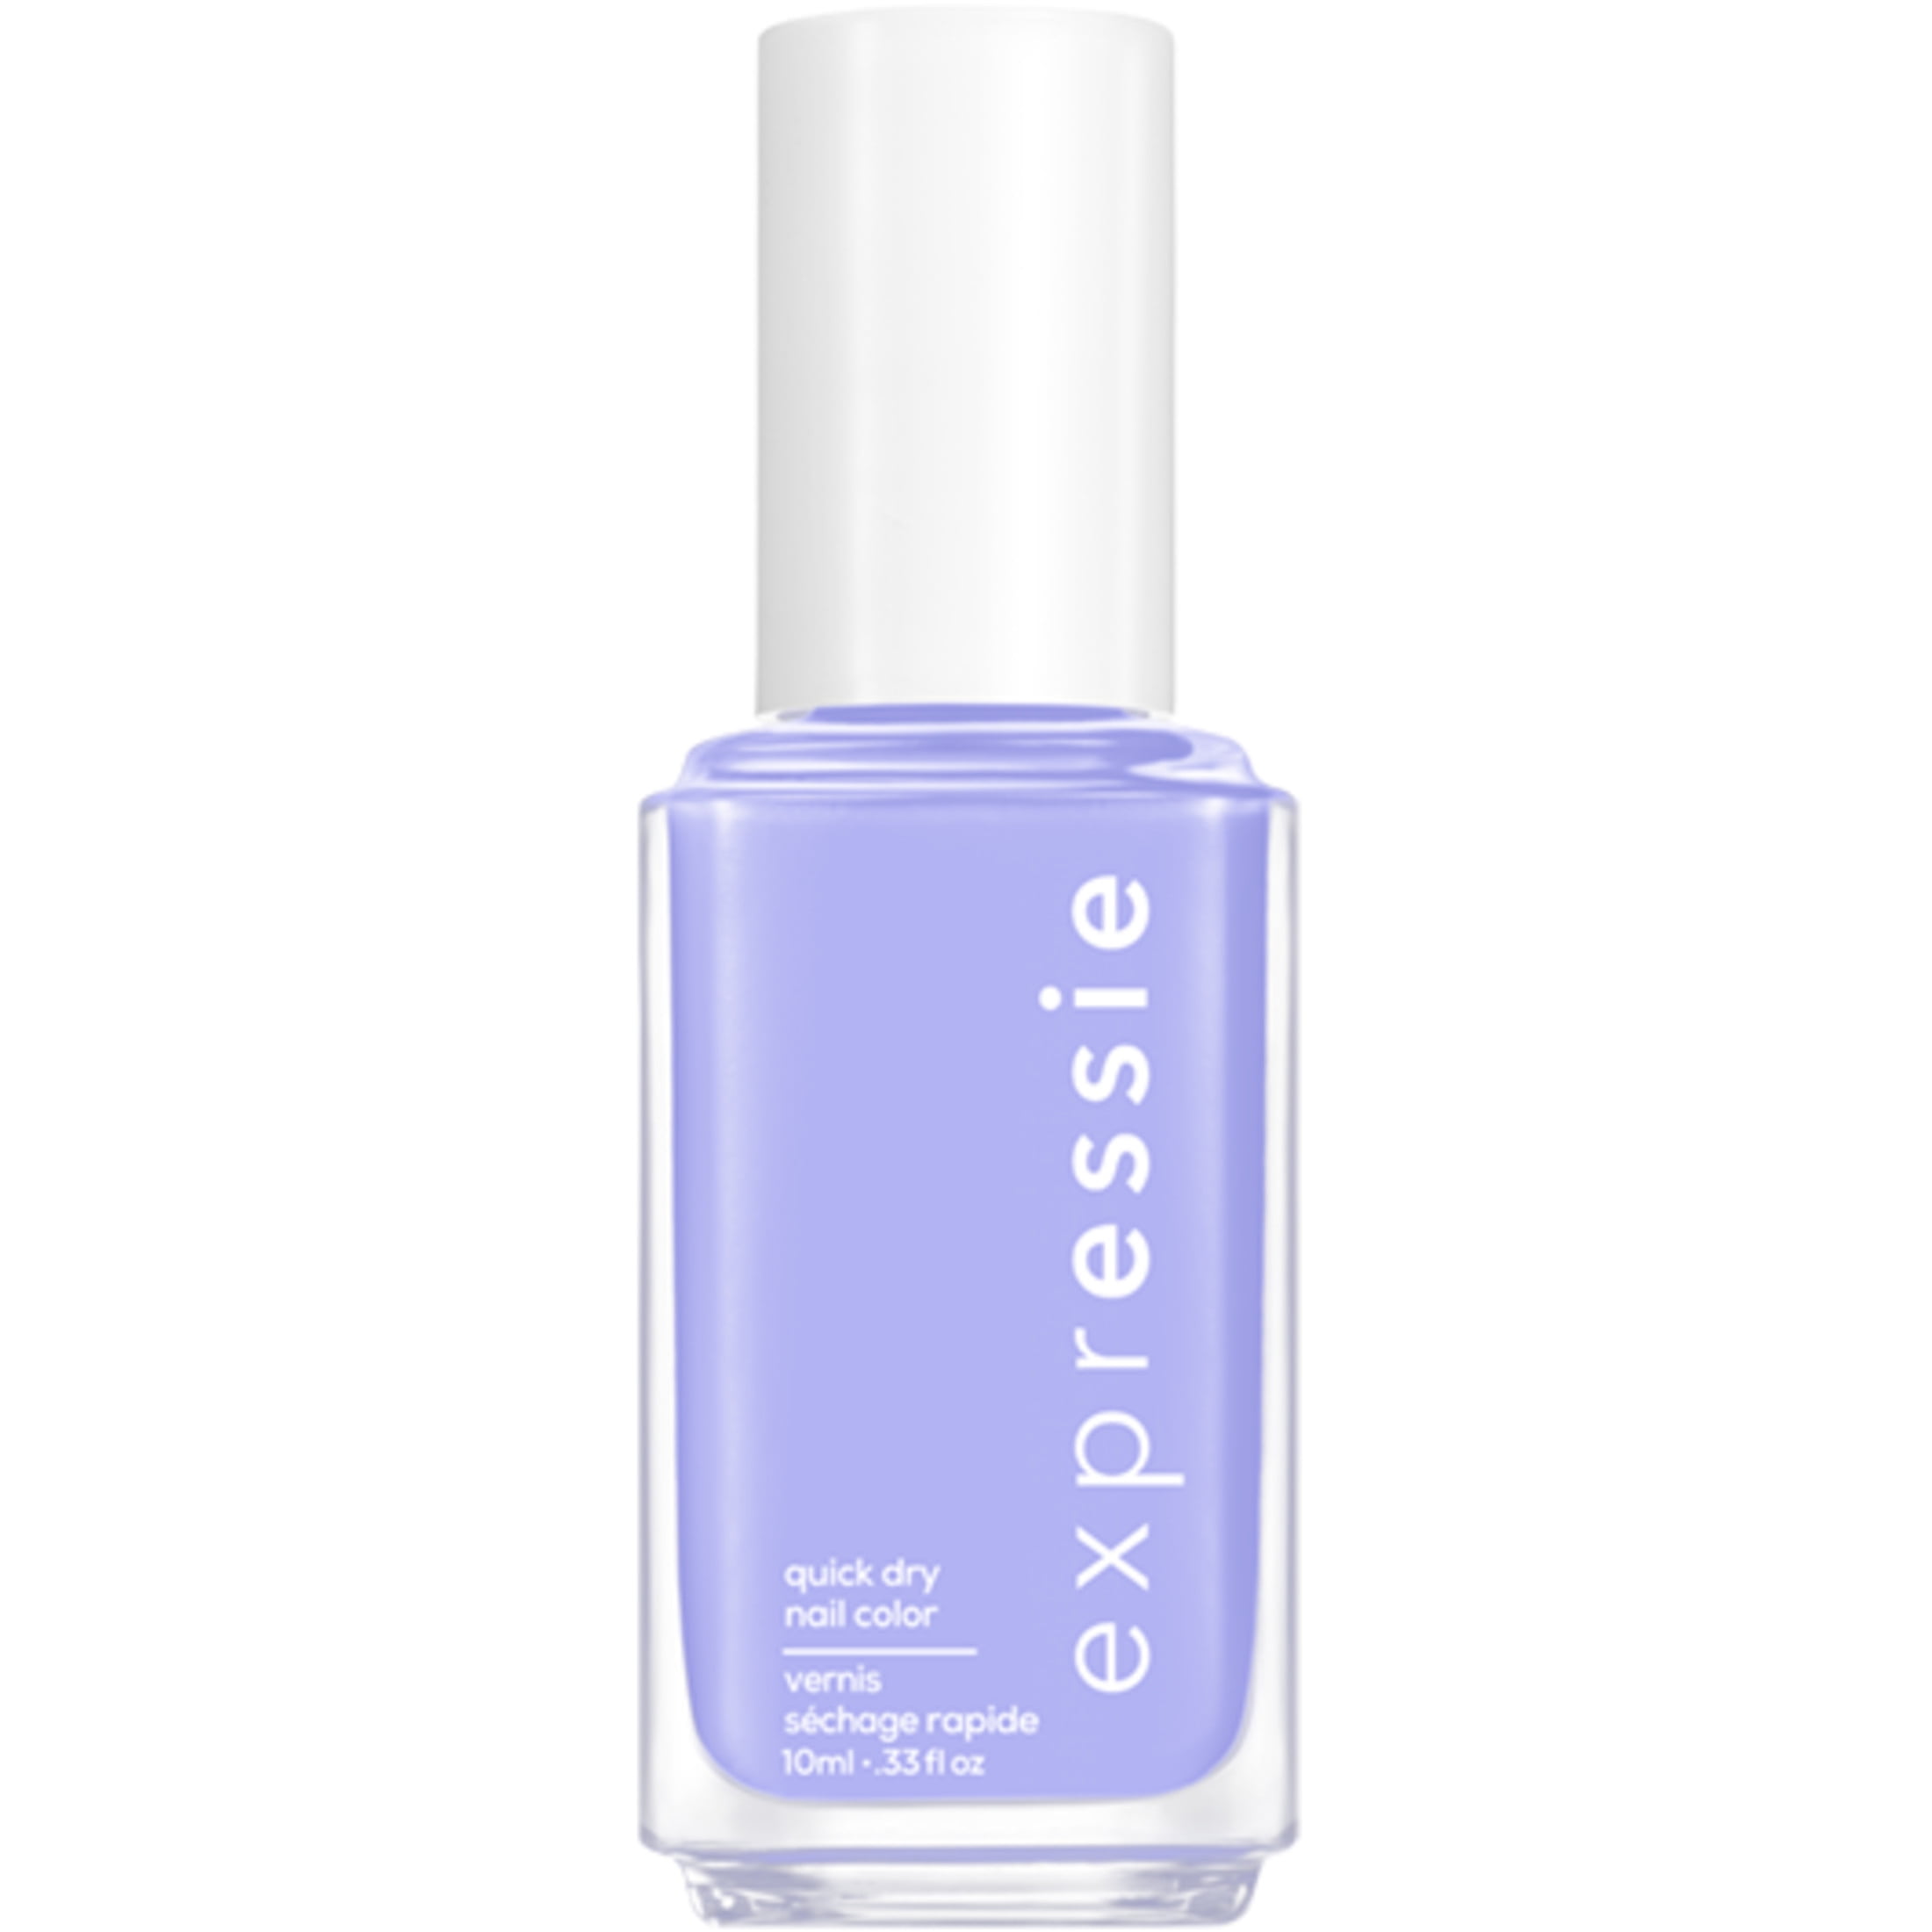 essie Lilac, oz 0.33 Bottle Polish, Quick Bright Vegan Expressie Nail Dry fl